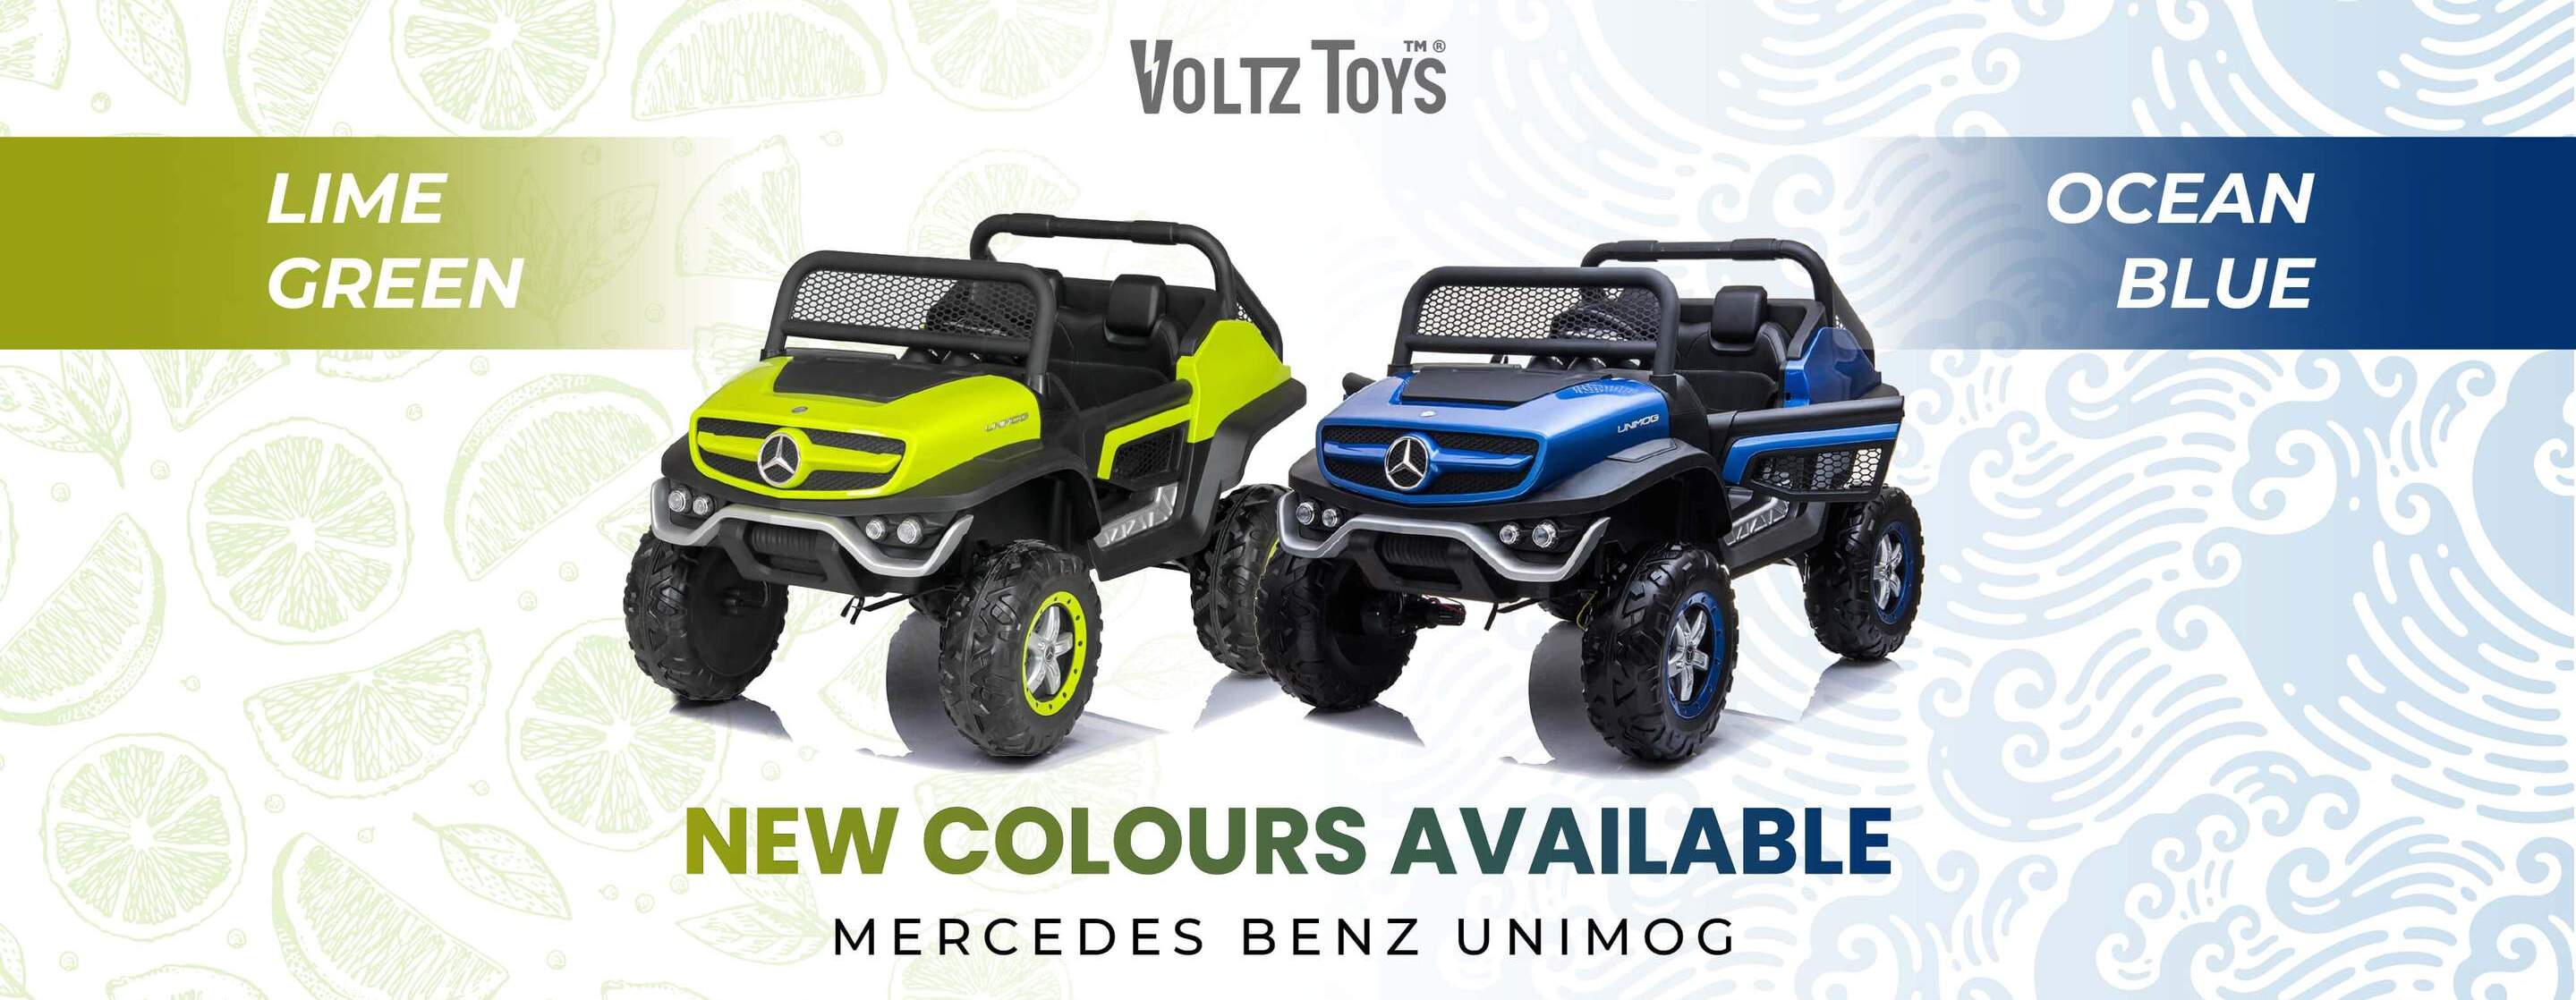 2 Seater Mercedes-Benz Unimog, Voltz Toys